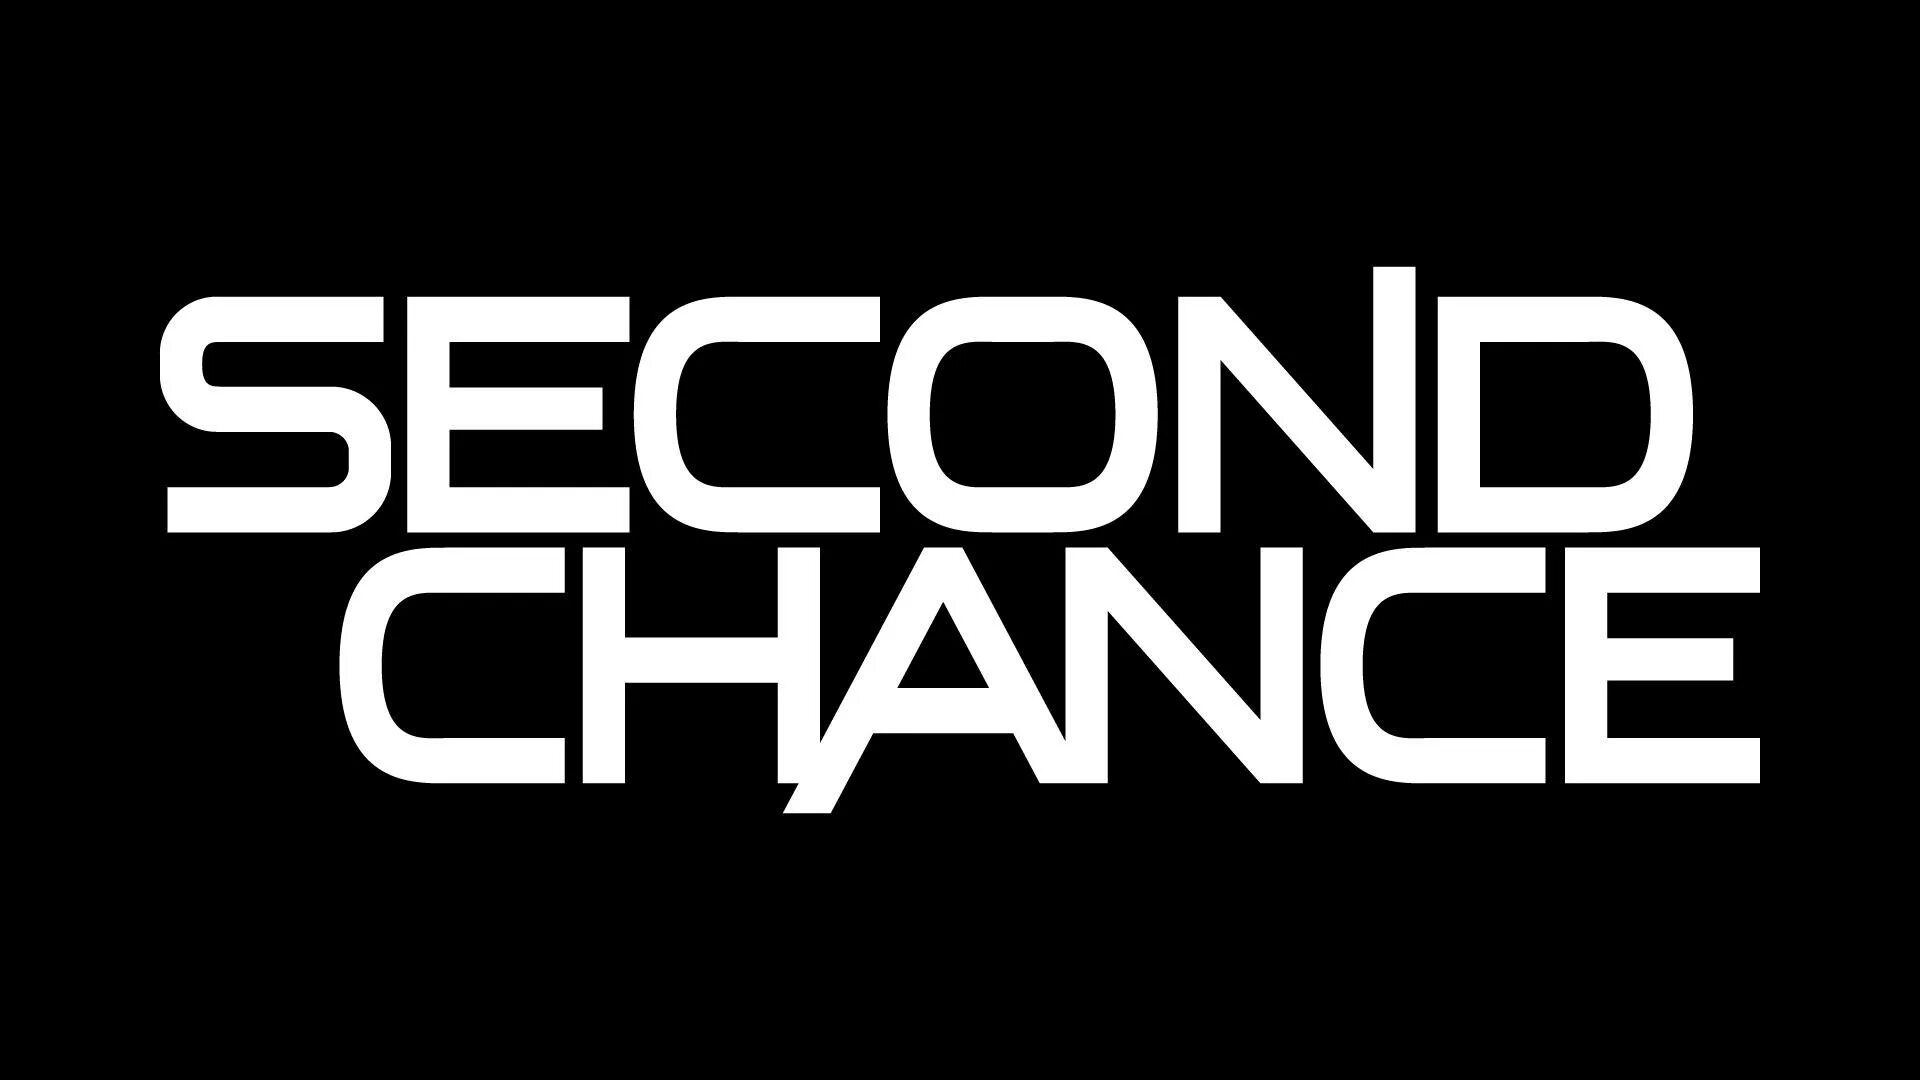 Second chance. Second chance Сераз. Логотип шансов ТВ. Secon chance надпись.